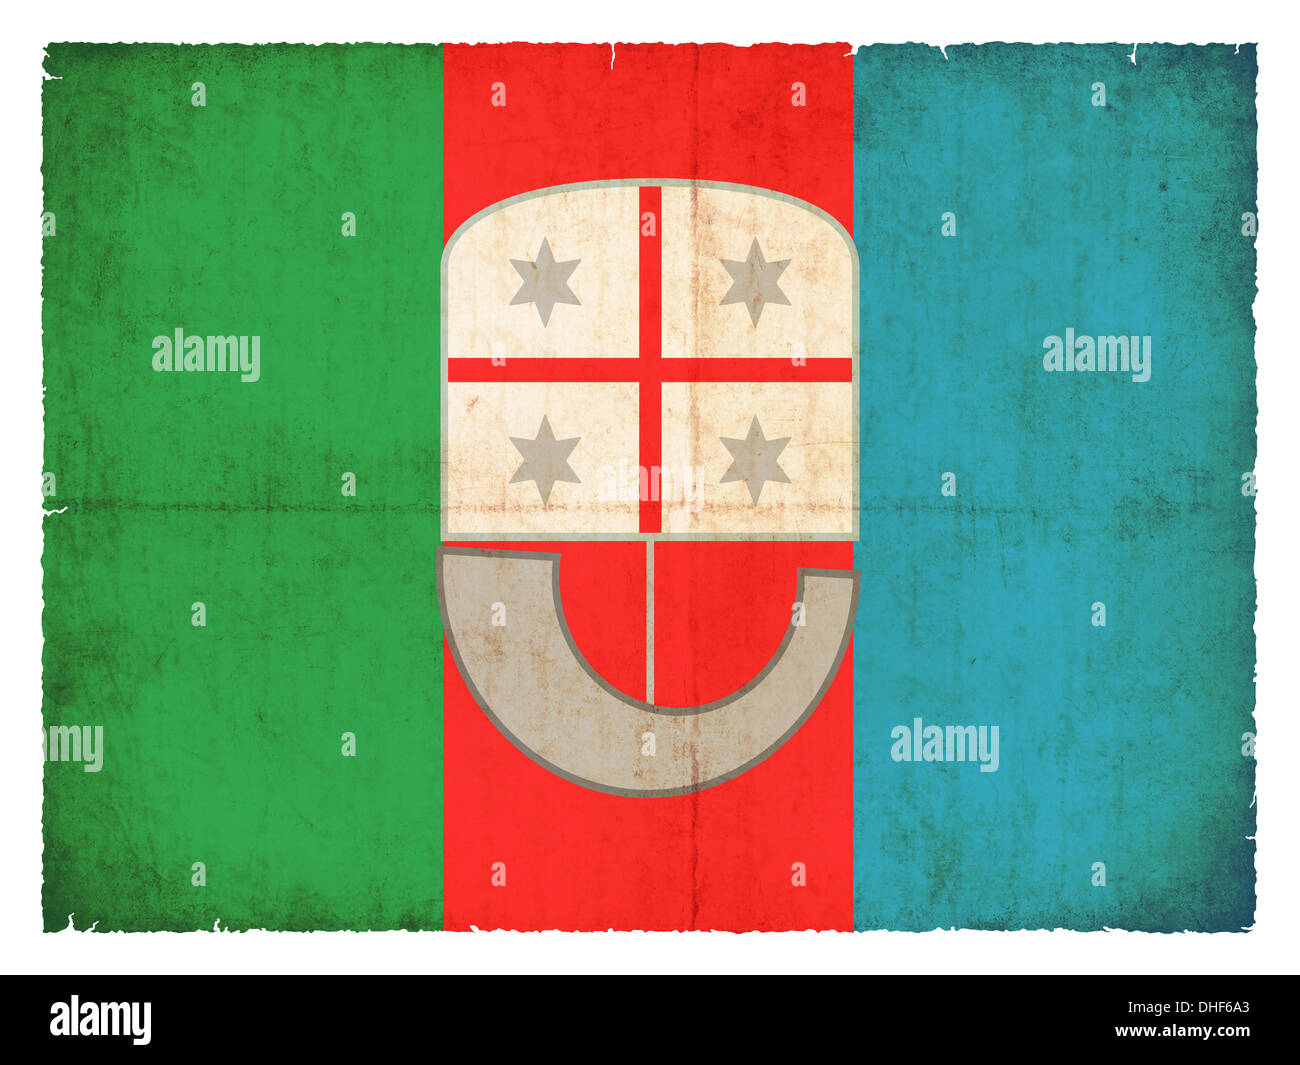 Flag of the italien region Liguria created in grunge style Stock Photo